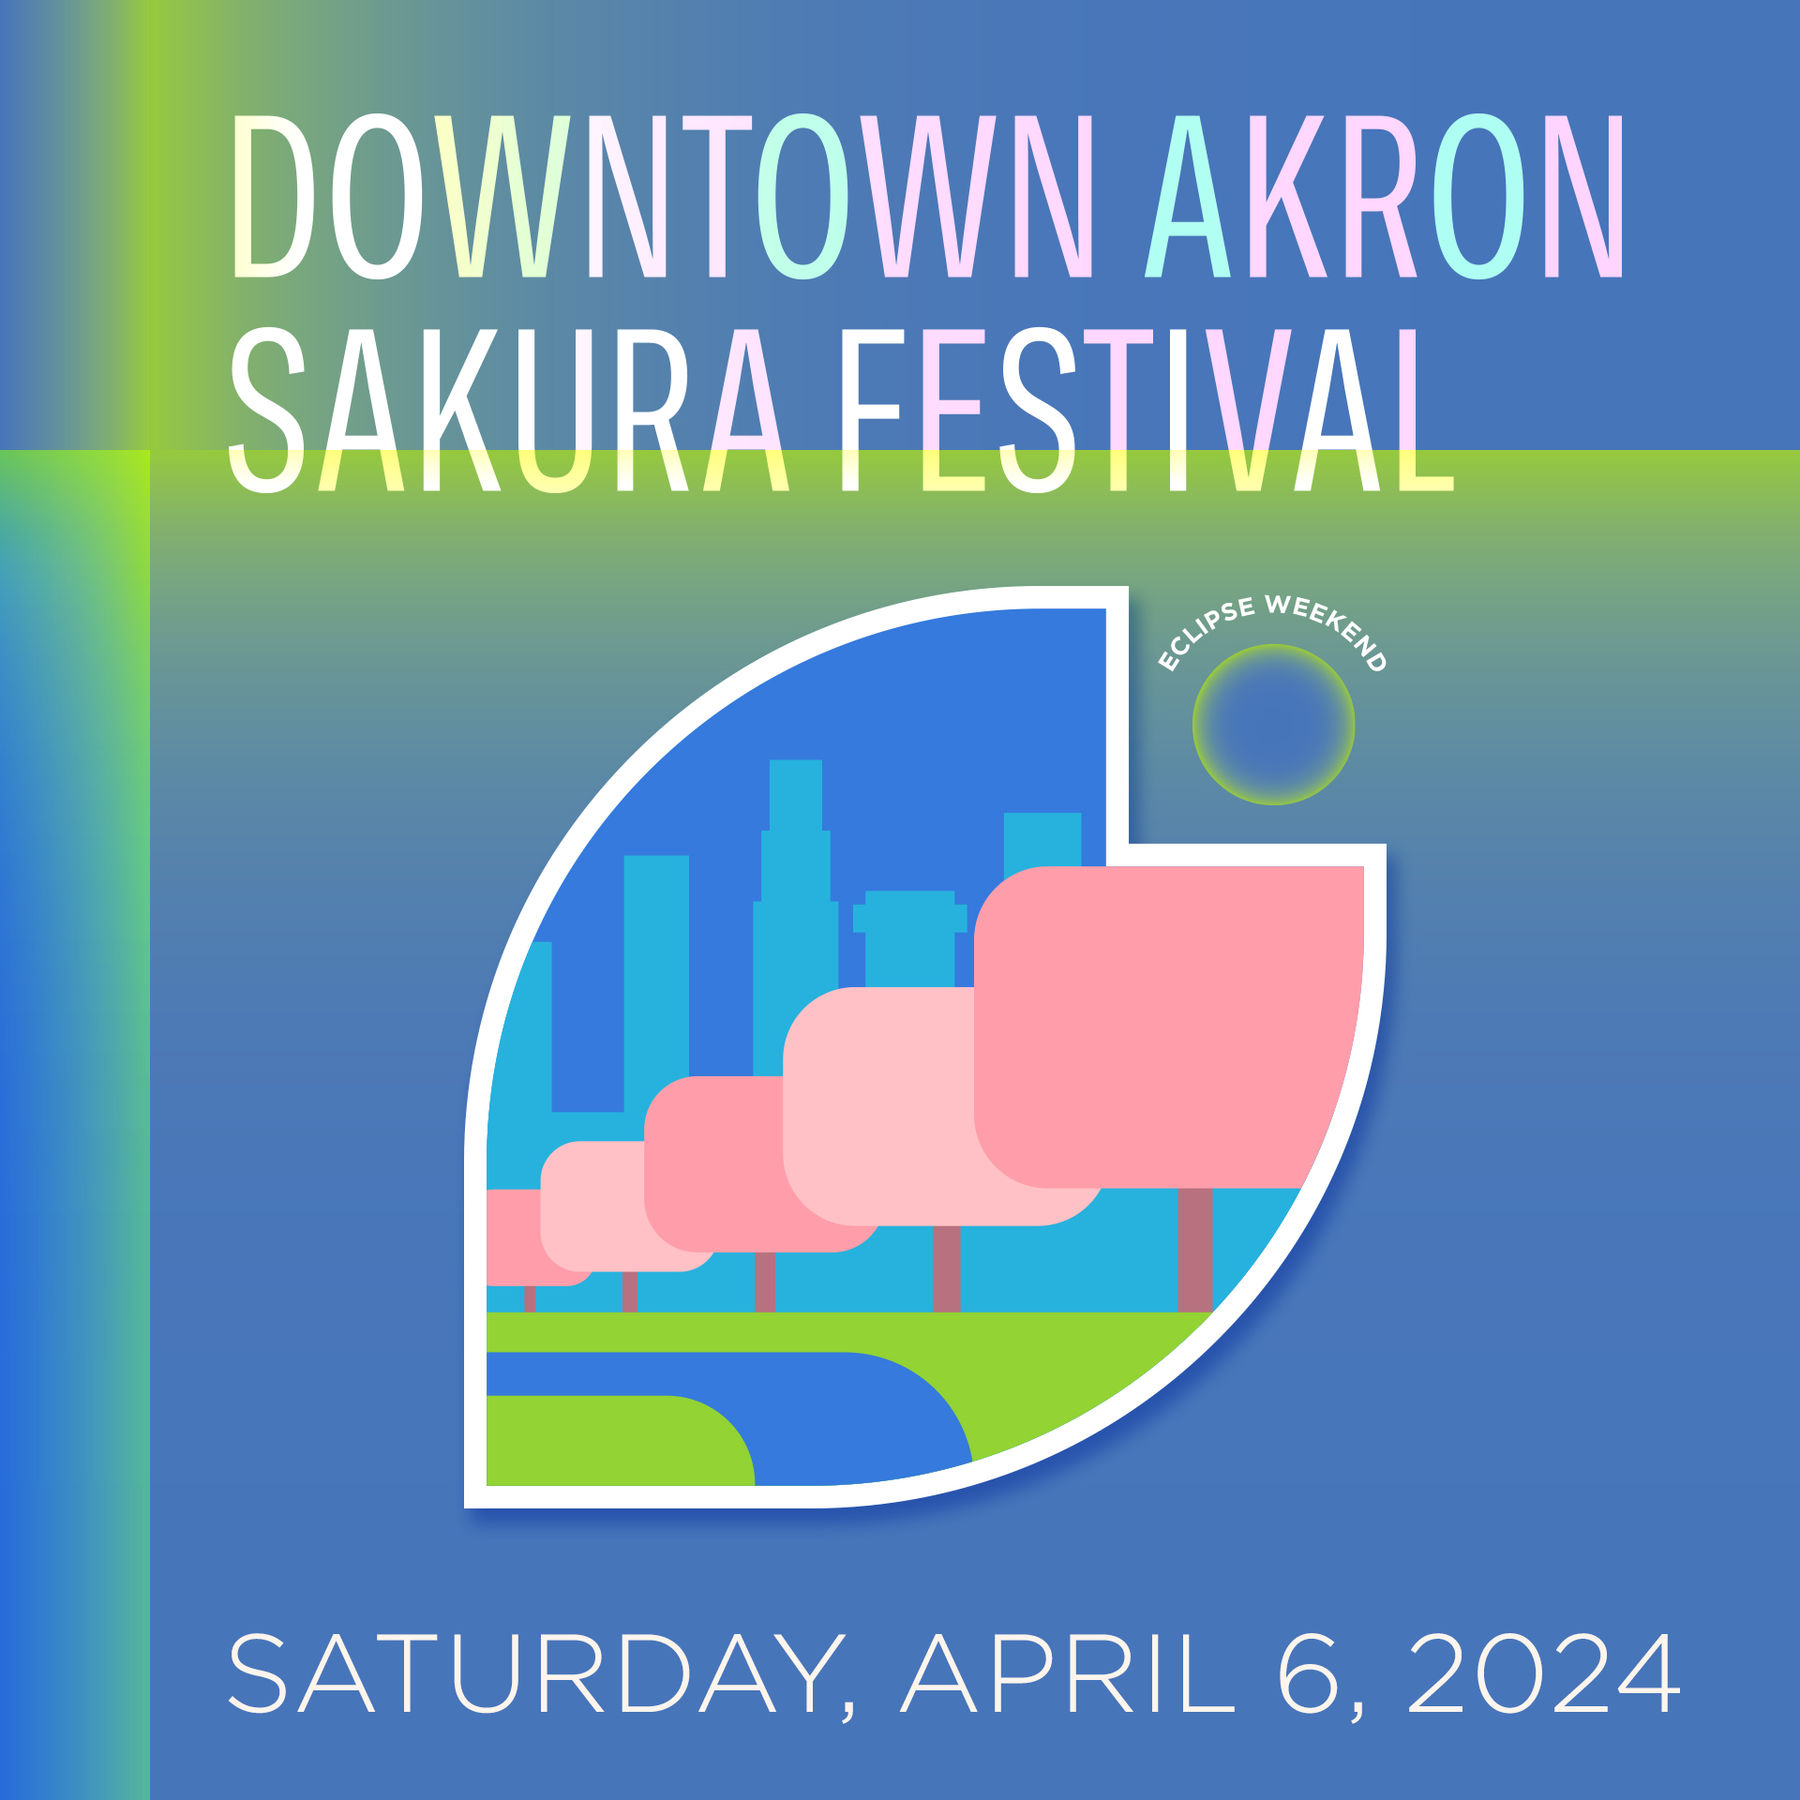 Graphic image of the Downtown Akron Sakura Festival Logo, with the text Downtown Akron Sakura Festival, Saturday, April 6, 2024